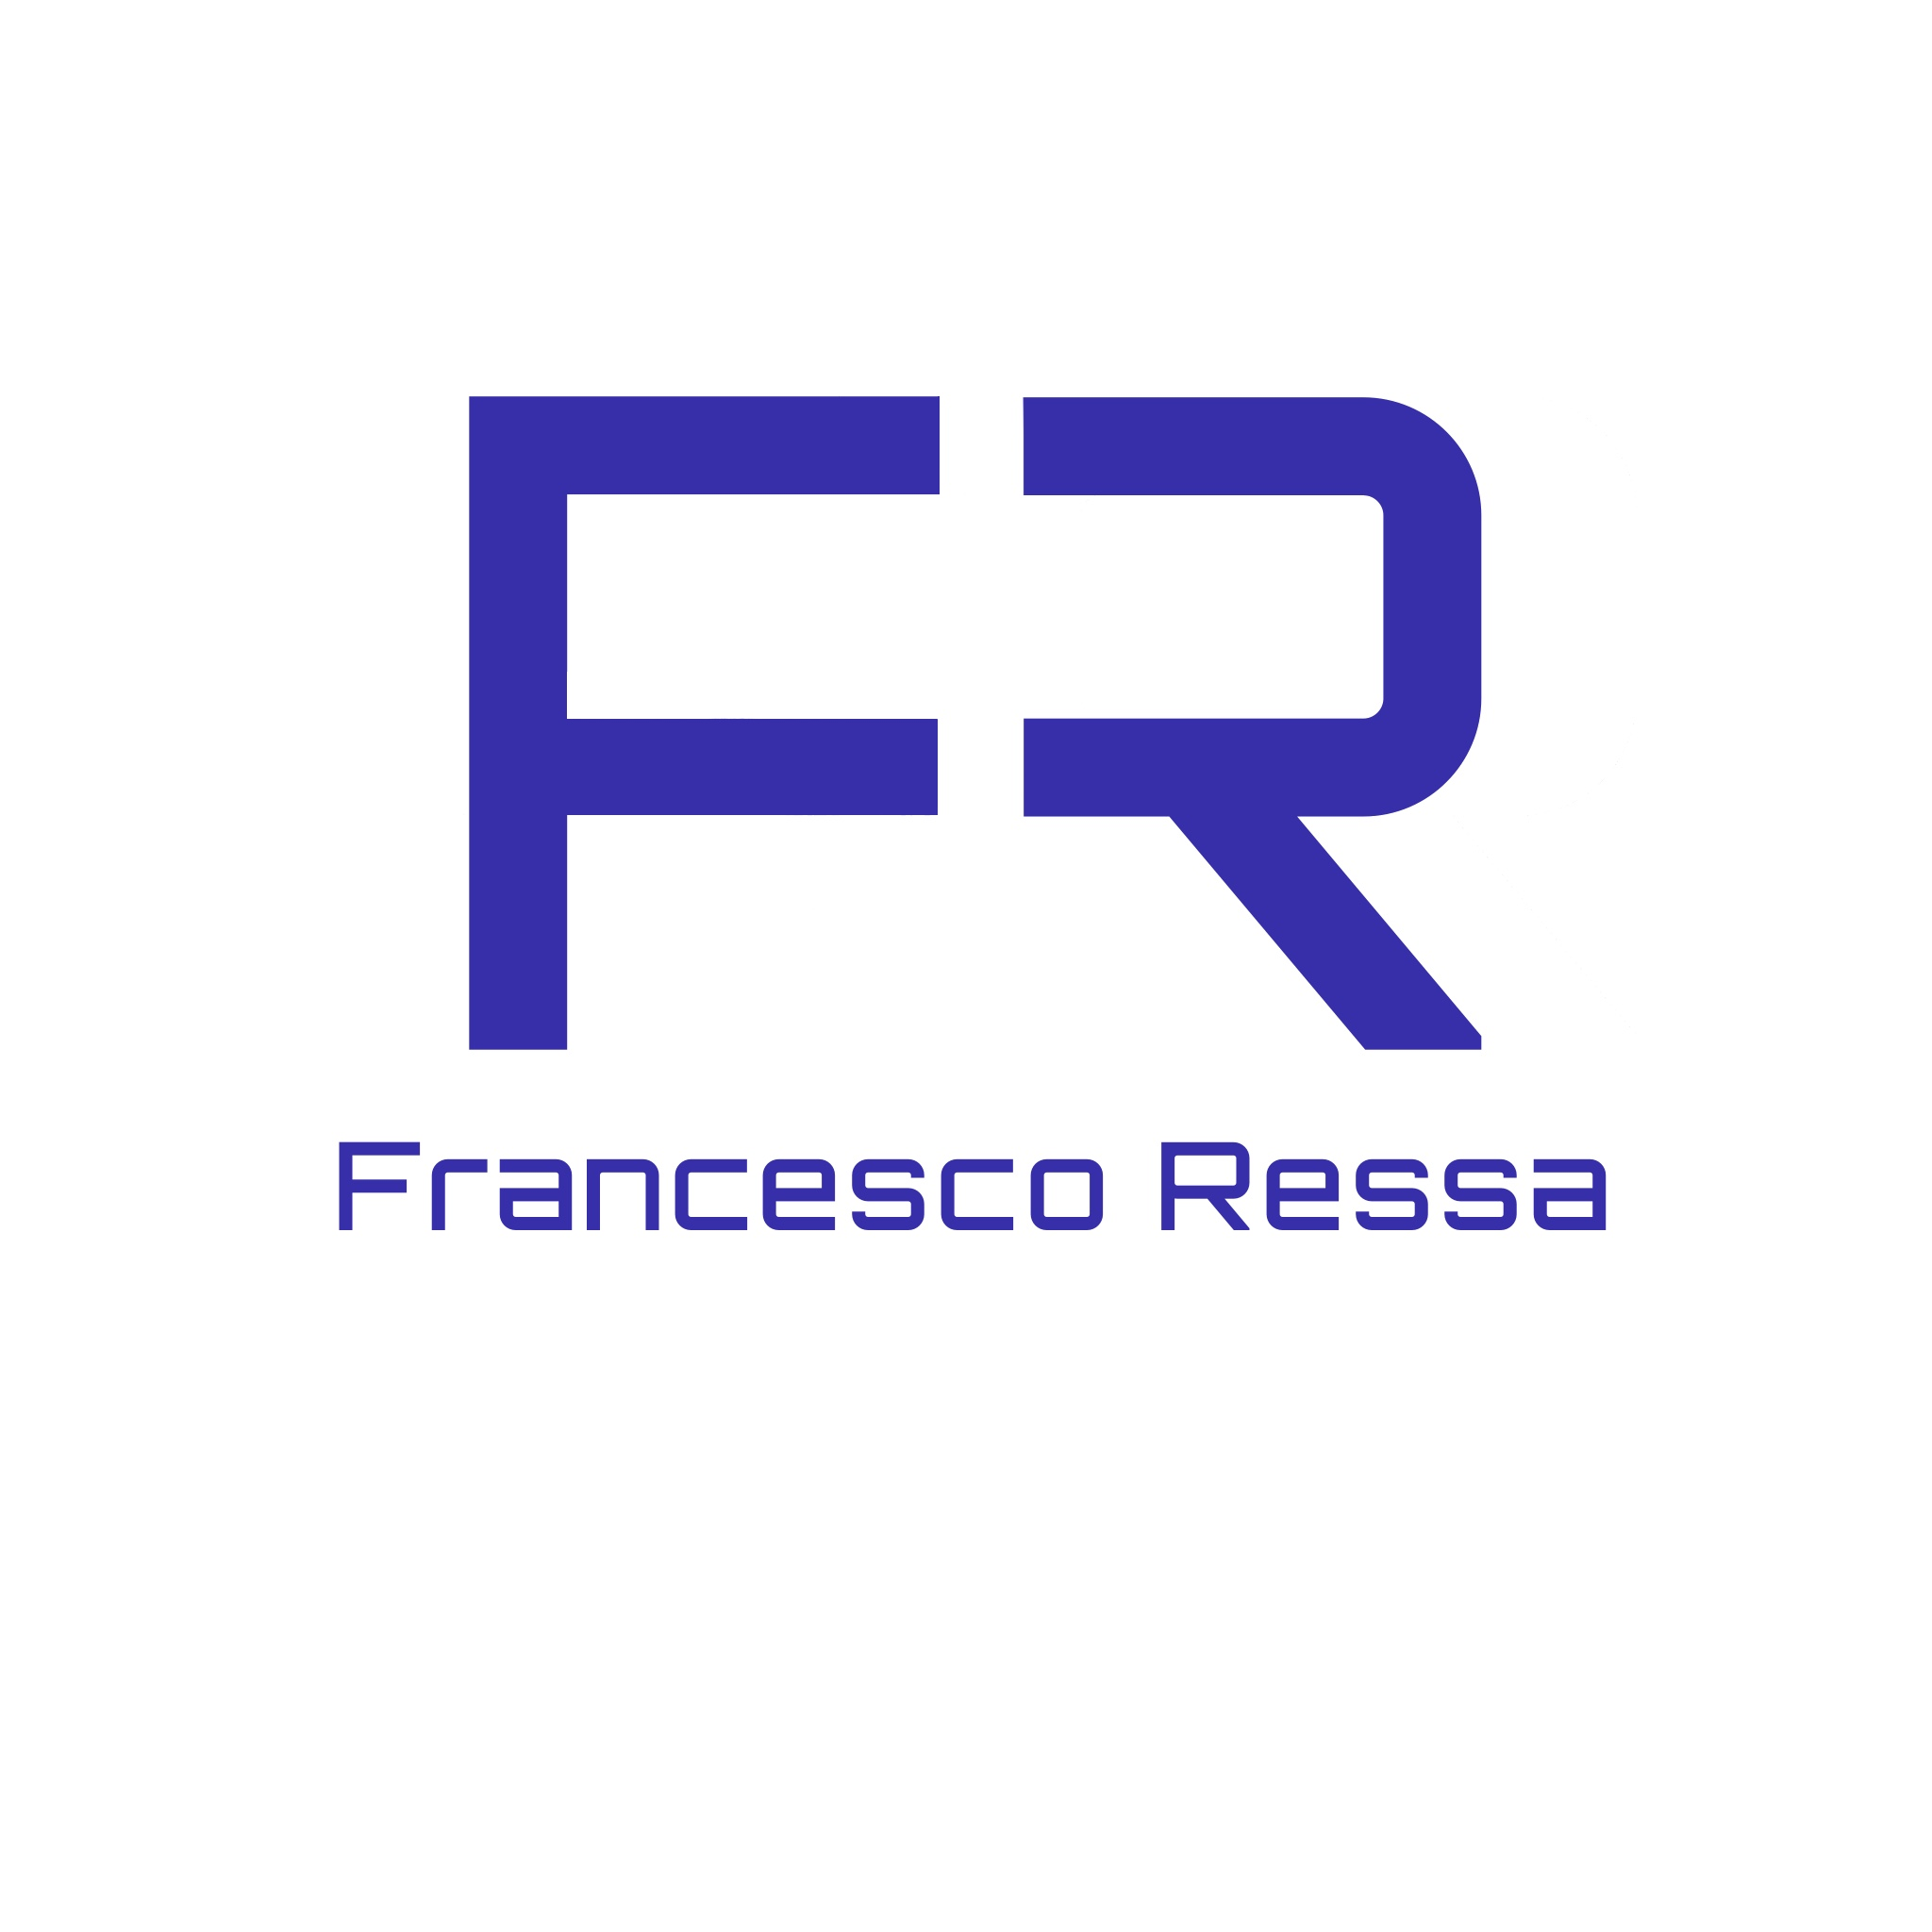 (c) Francescoressa.it